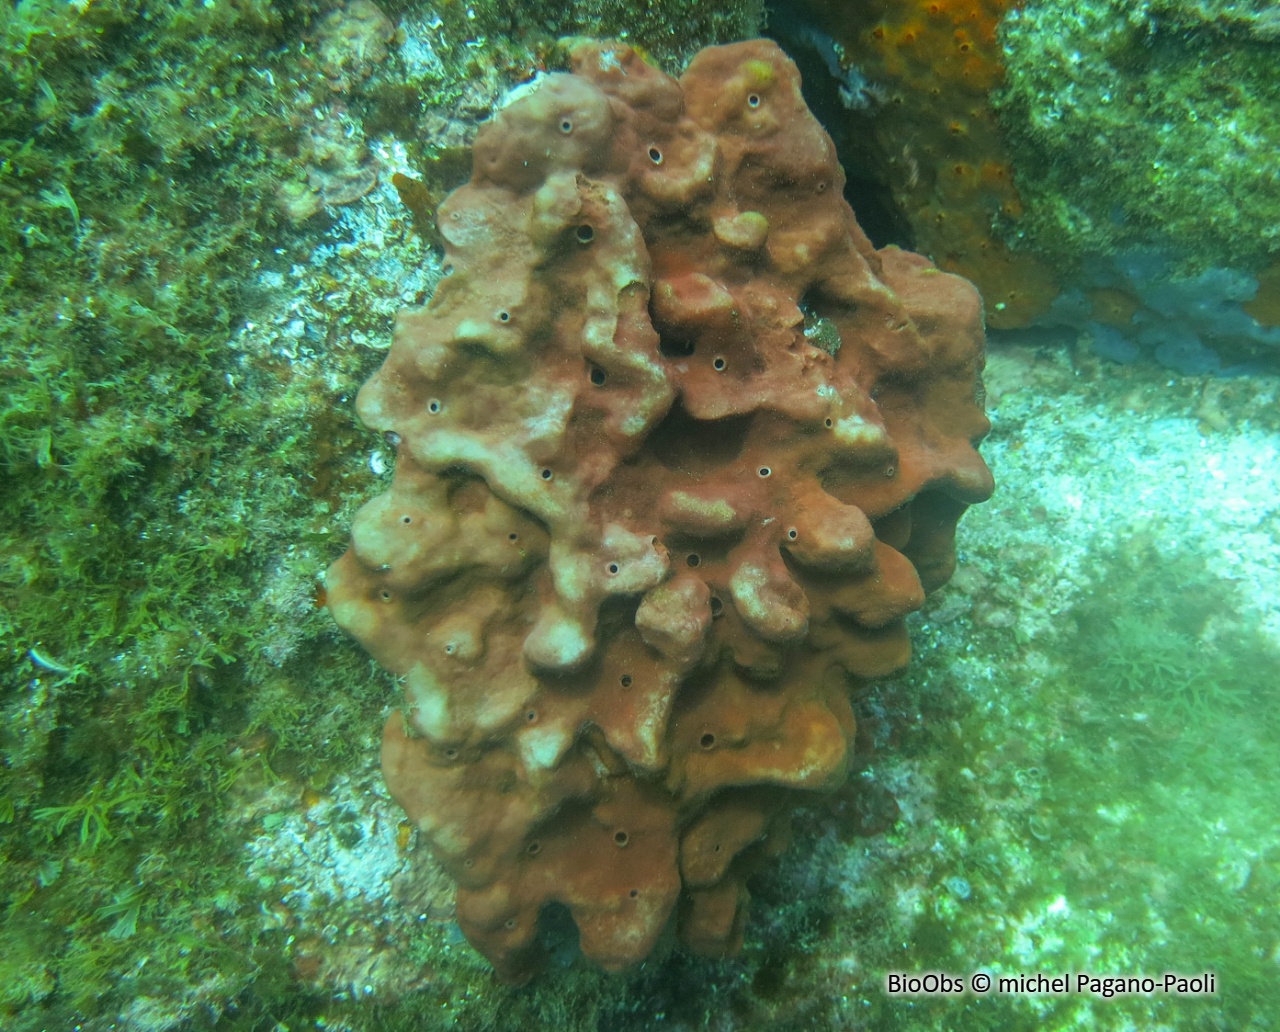 Eponge pierre - Petrosia (Petrosia) ficiformis - michel Pagano-Paoli - BioObs